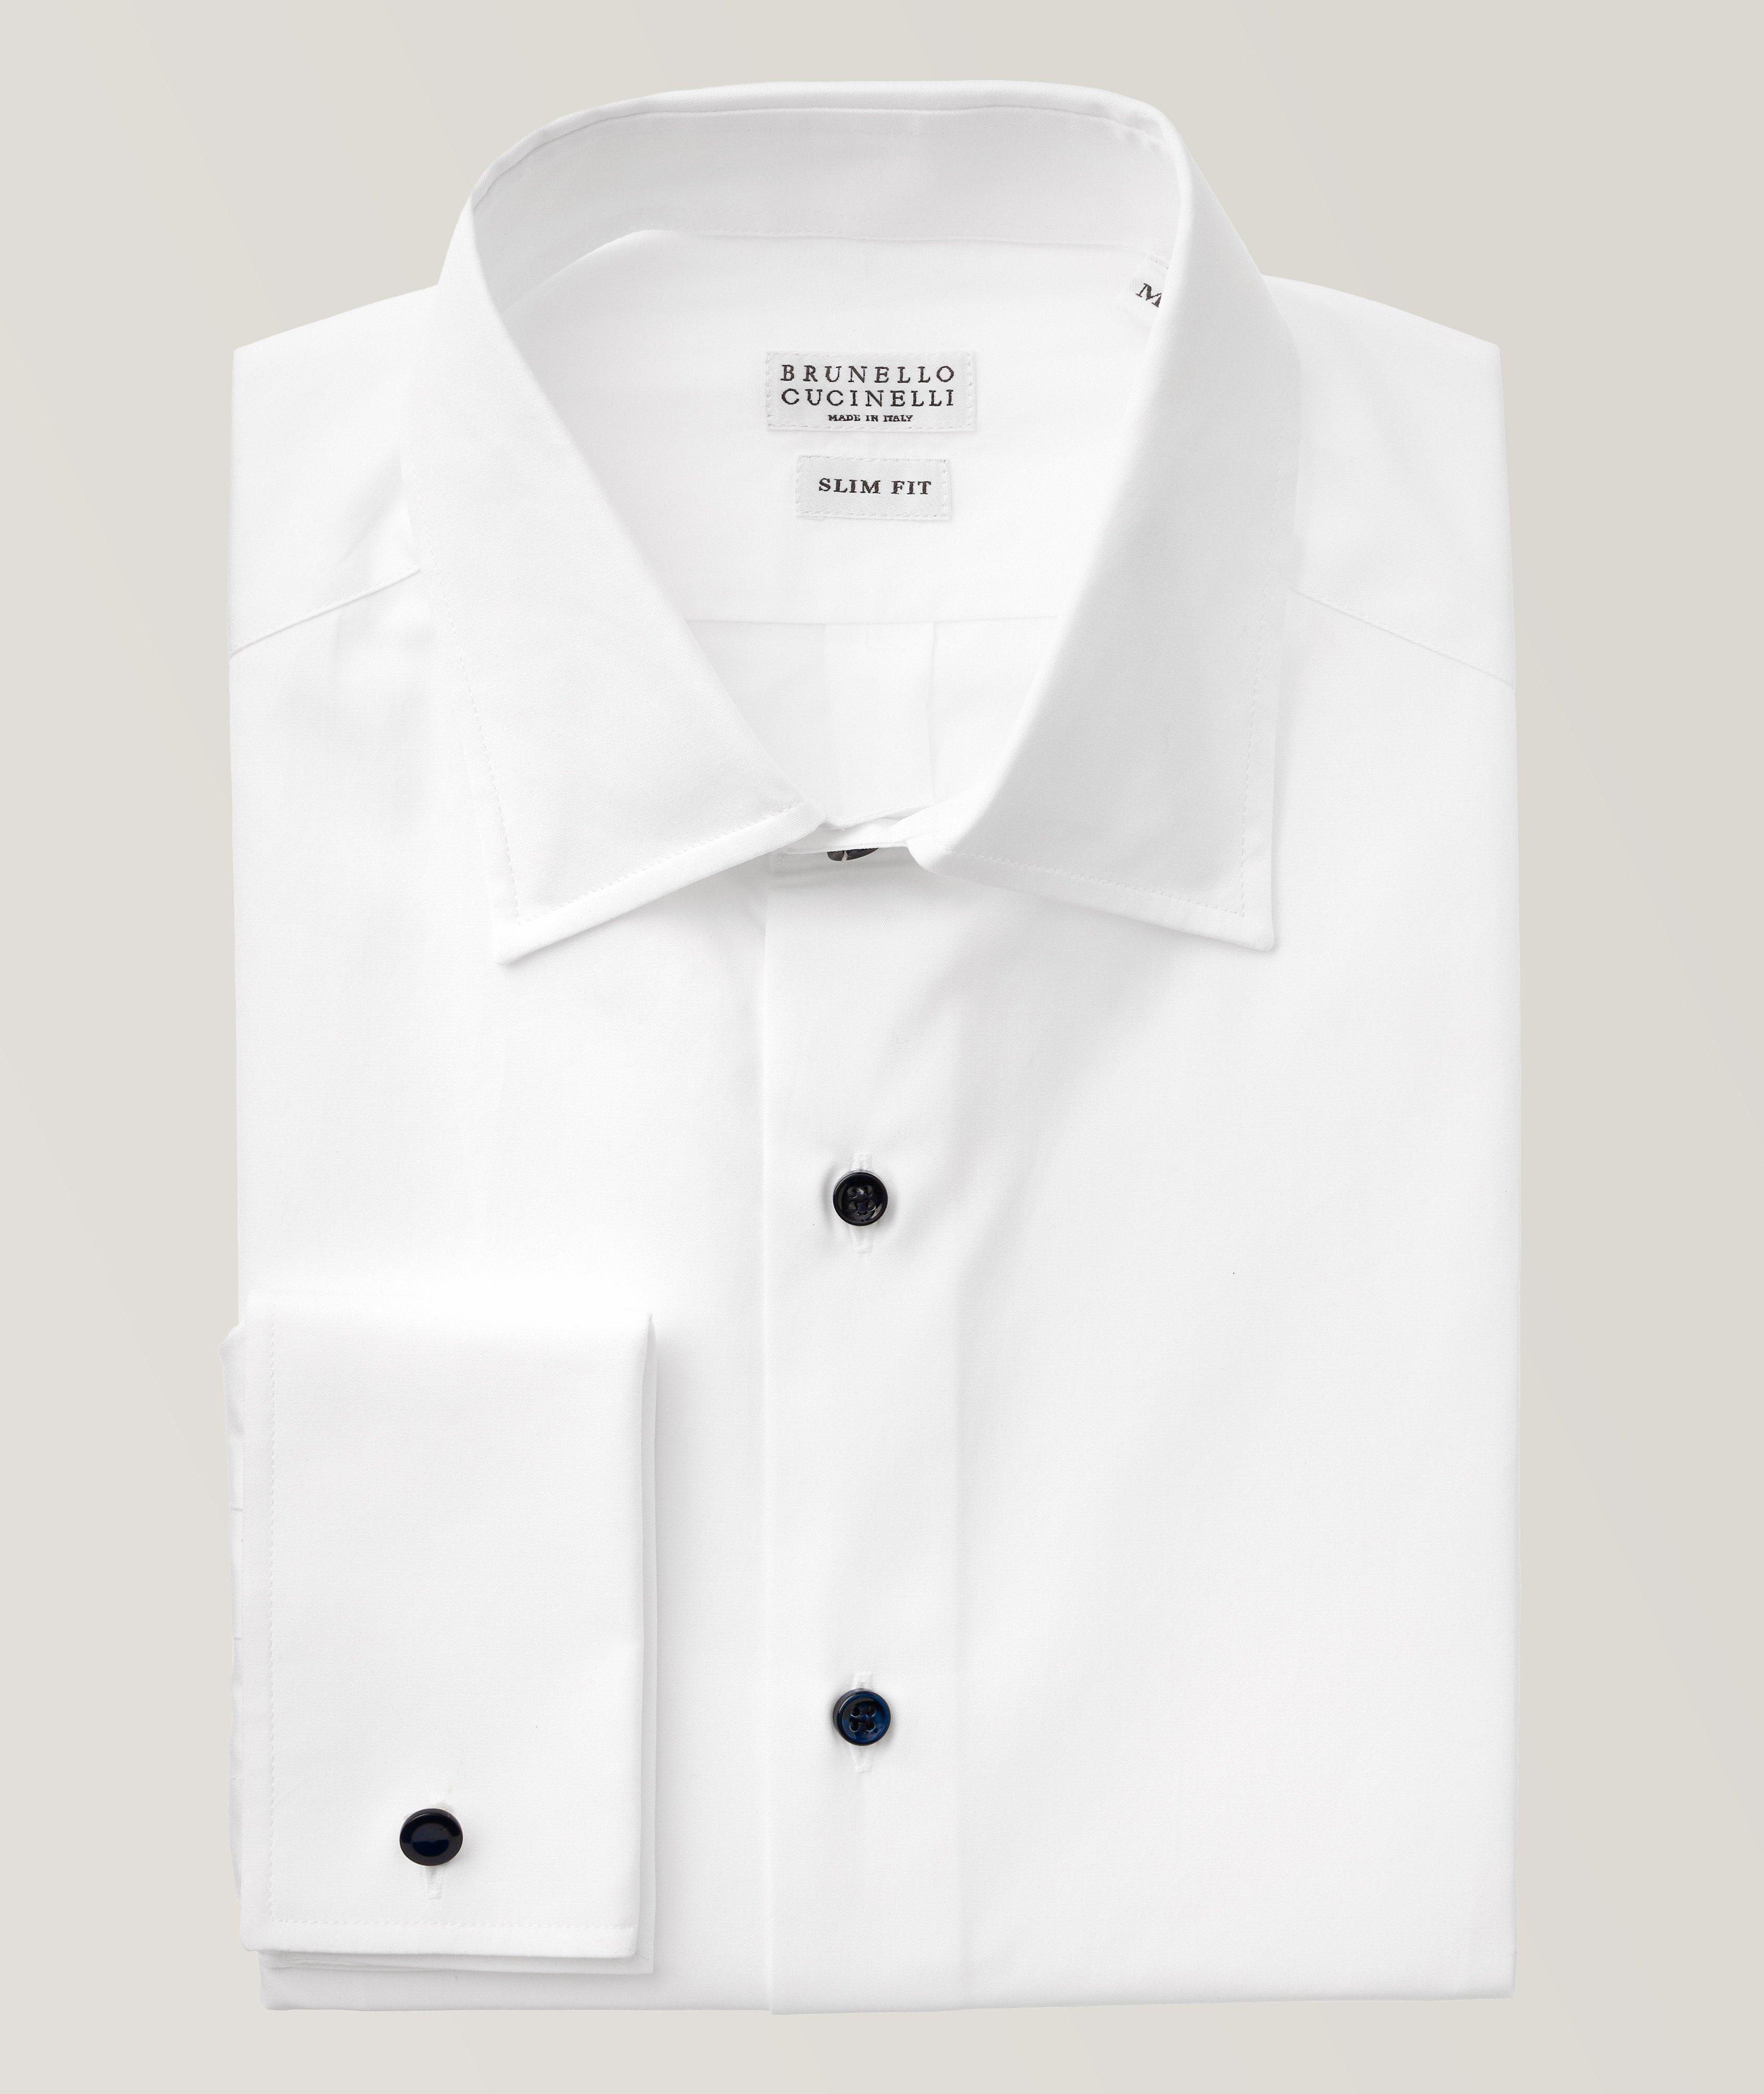 Brunello Cucinelli Slim-Fit Tuxedo Dress Shirt